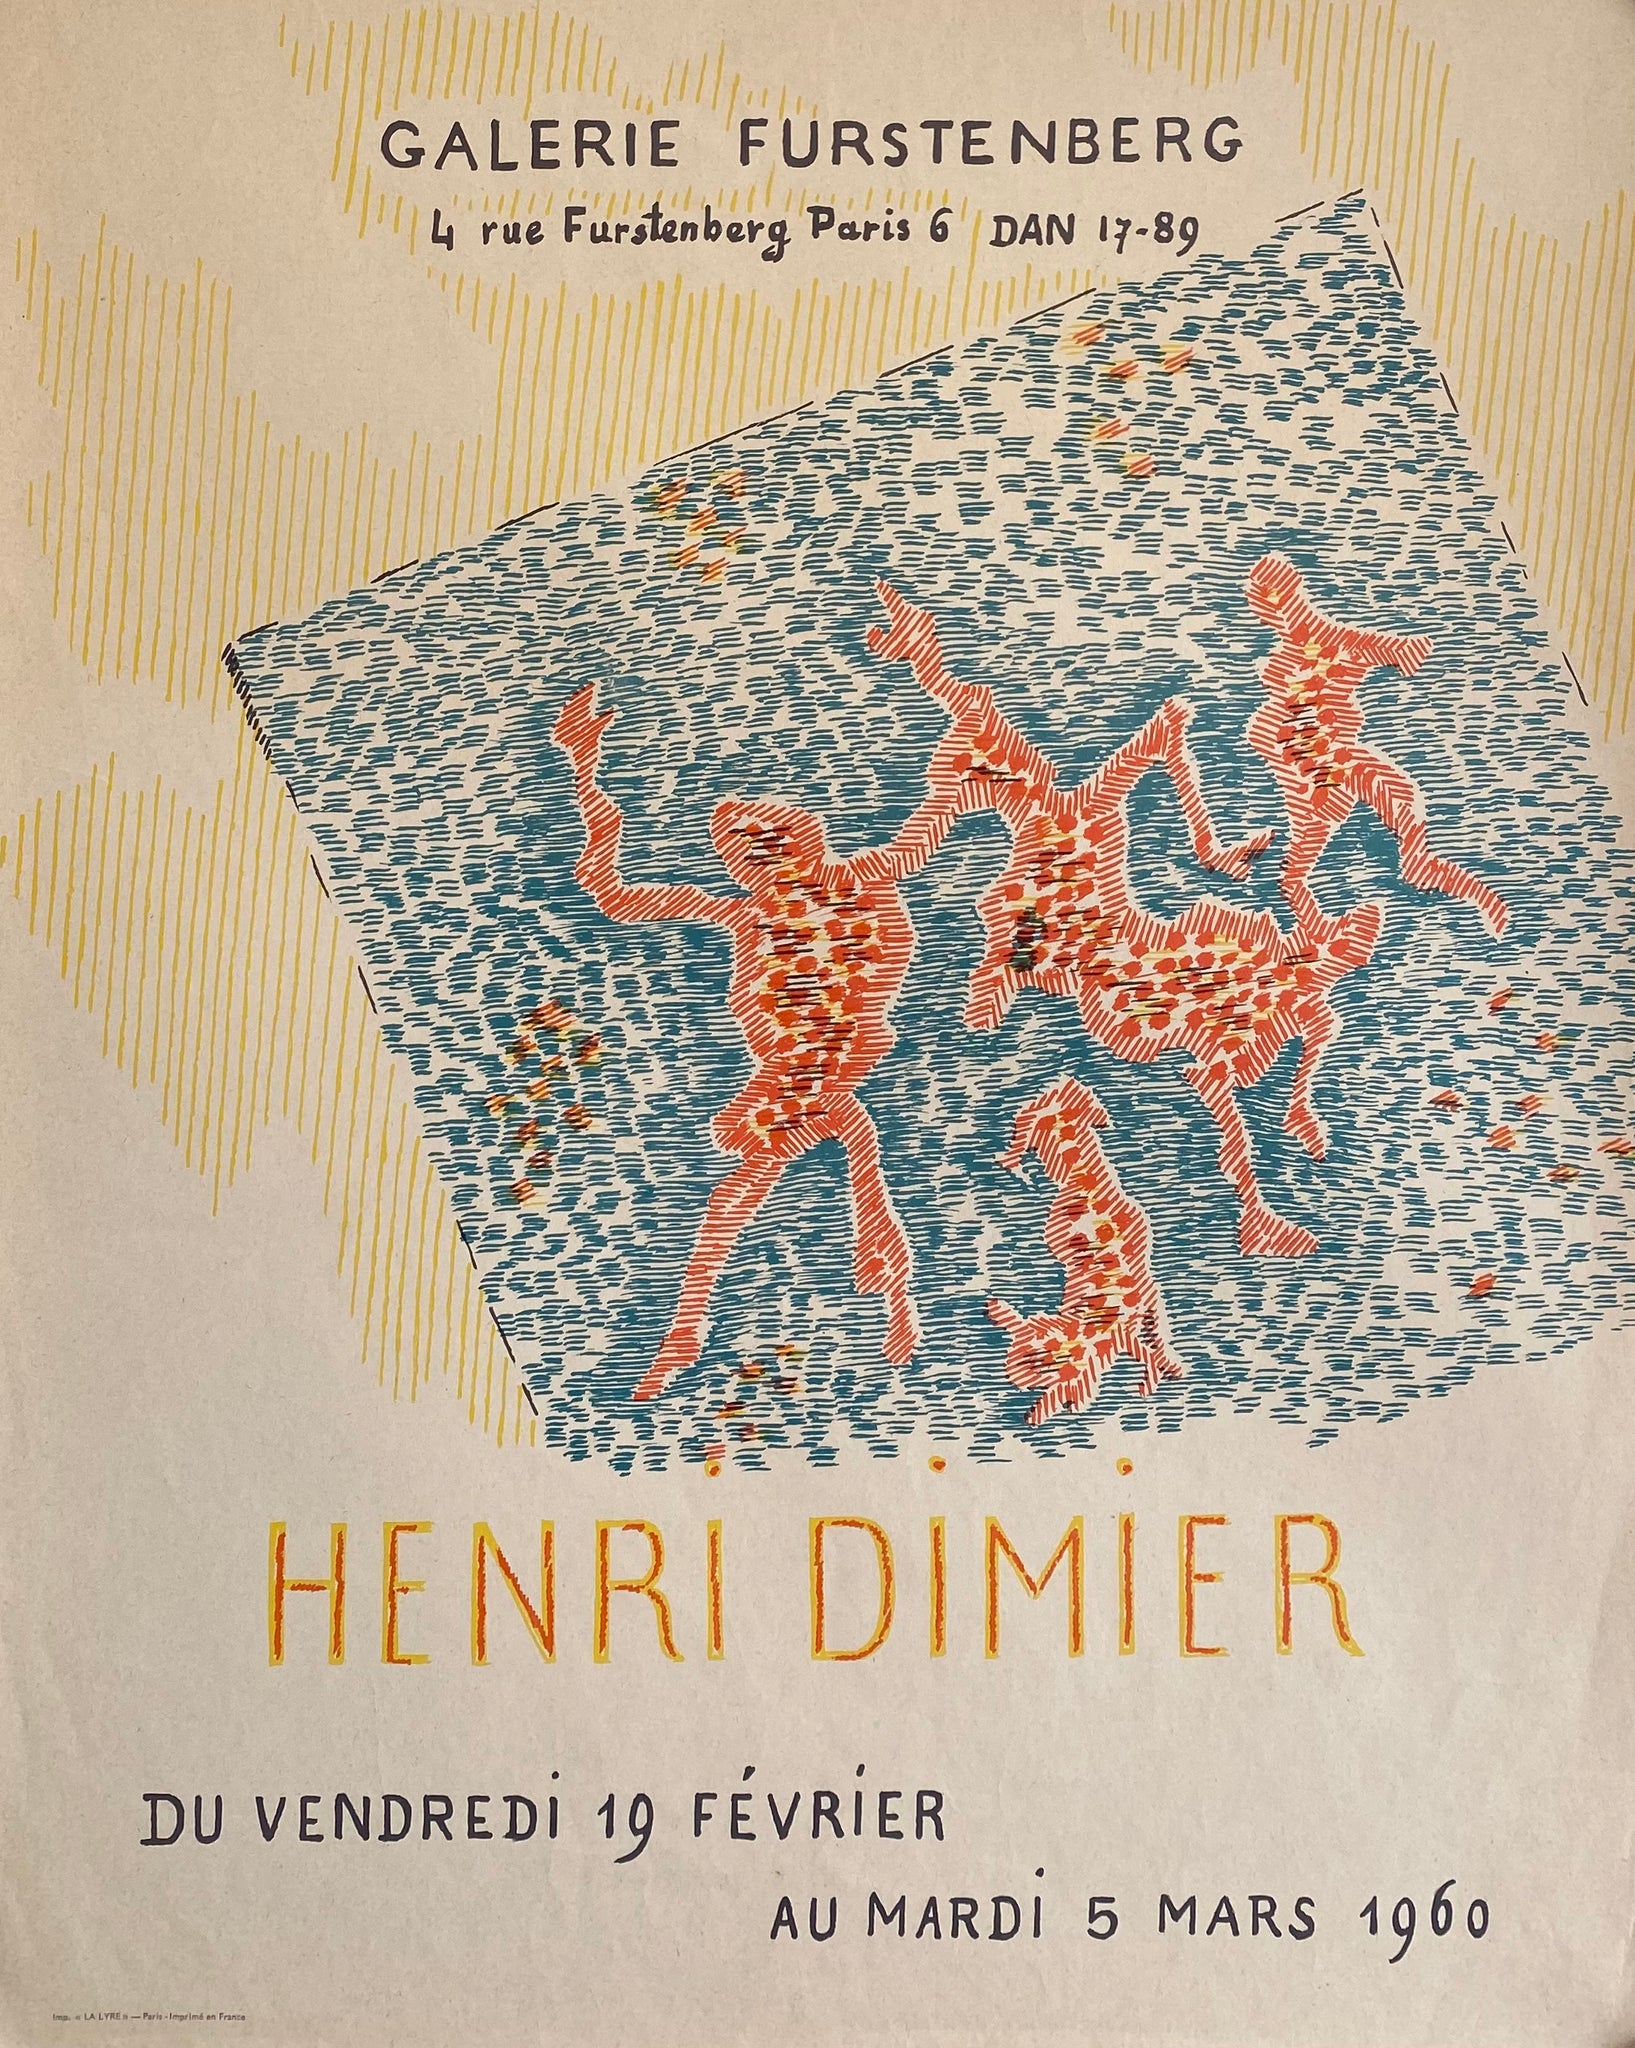 Affiche Galerie Furstenberg   Par Henri Dimier, 1960 